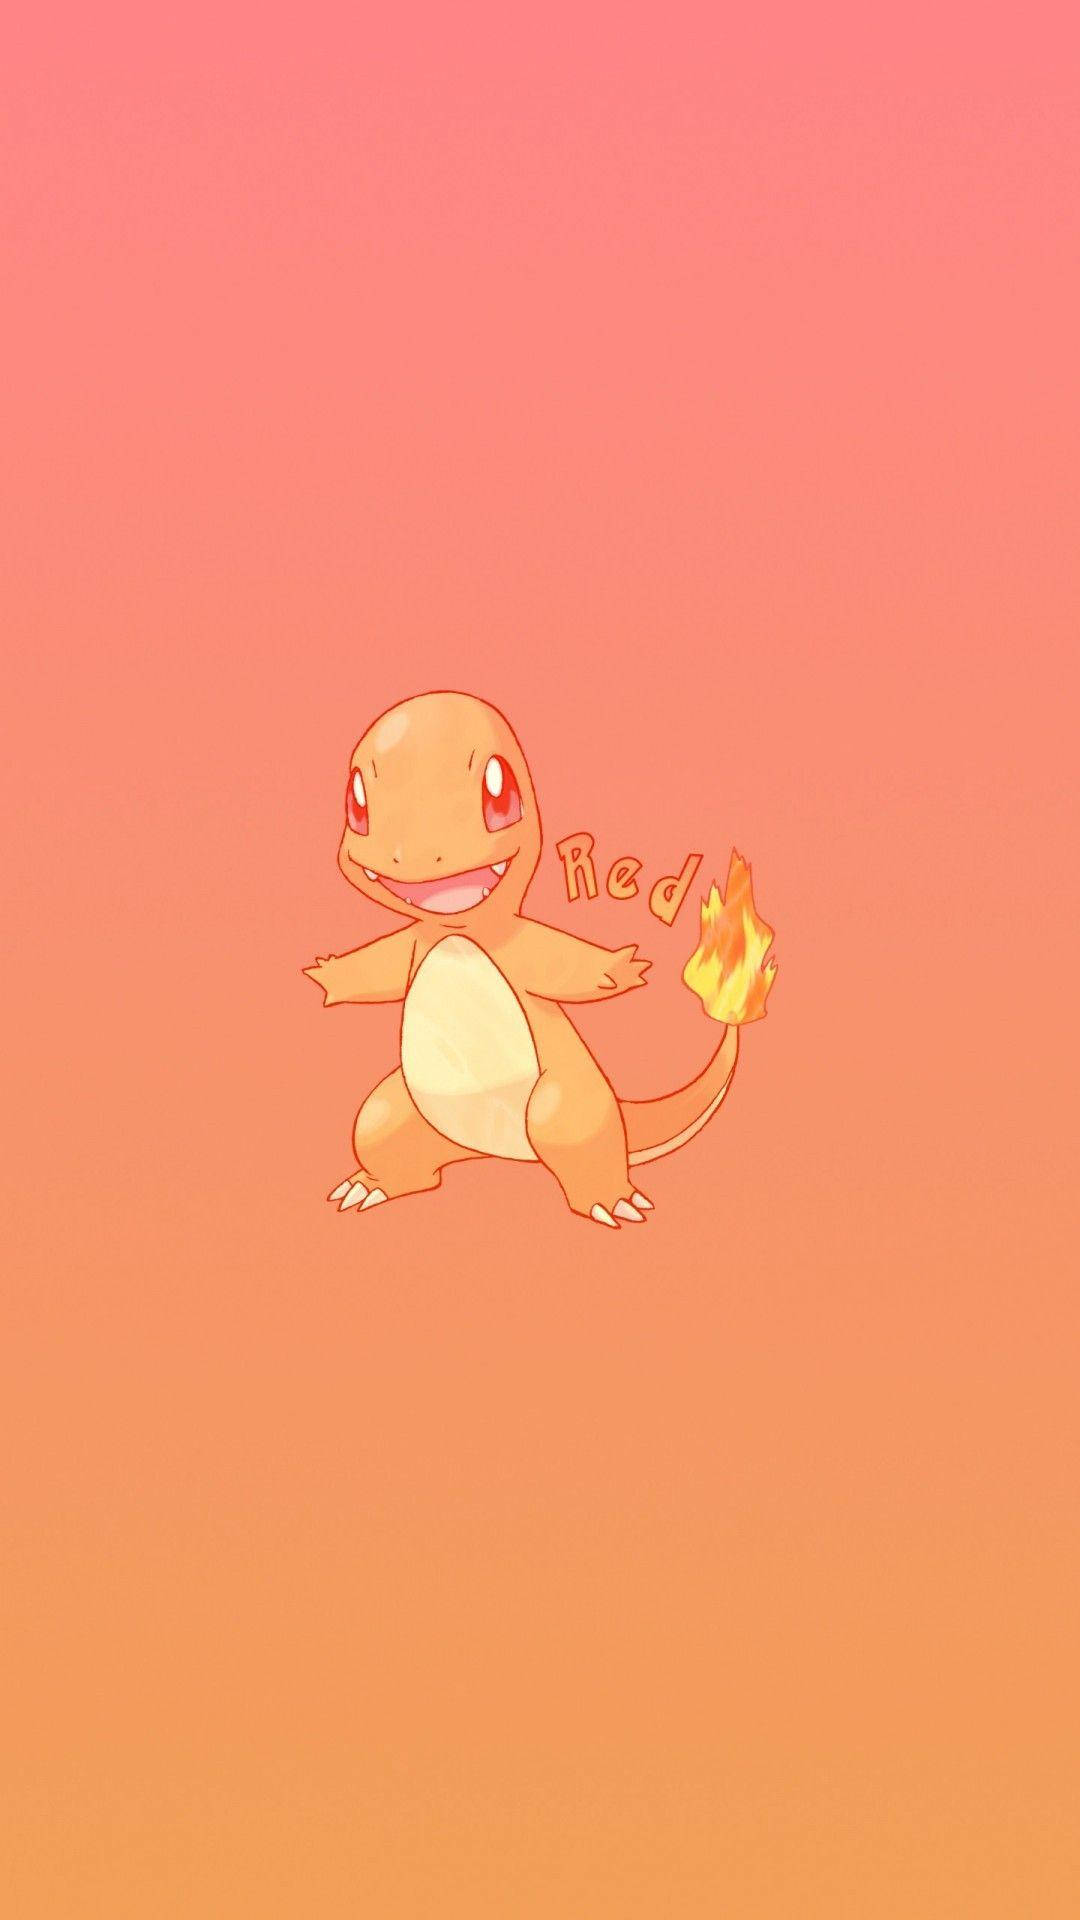 Charmander The Fire-type Pokémon